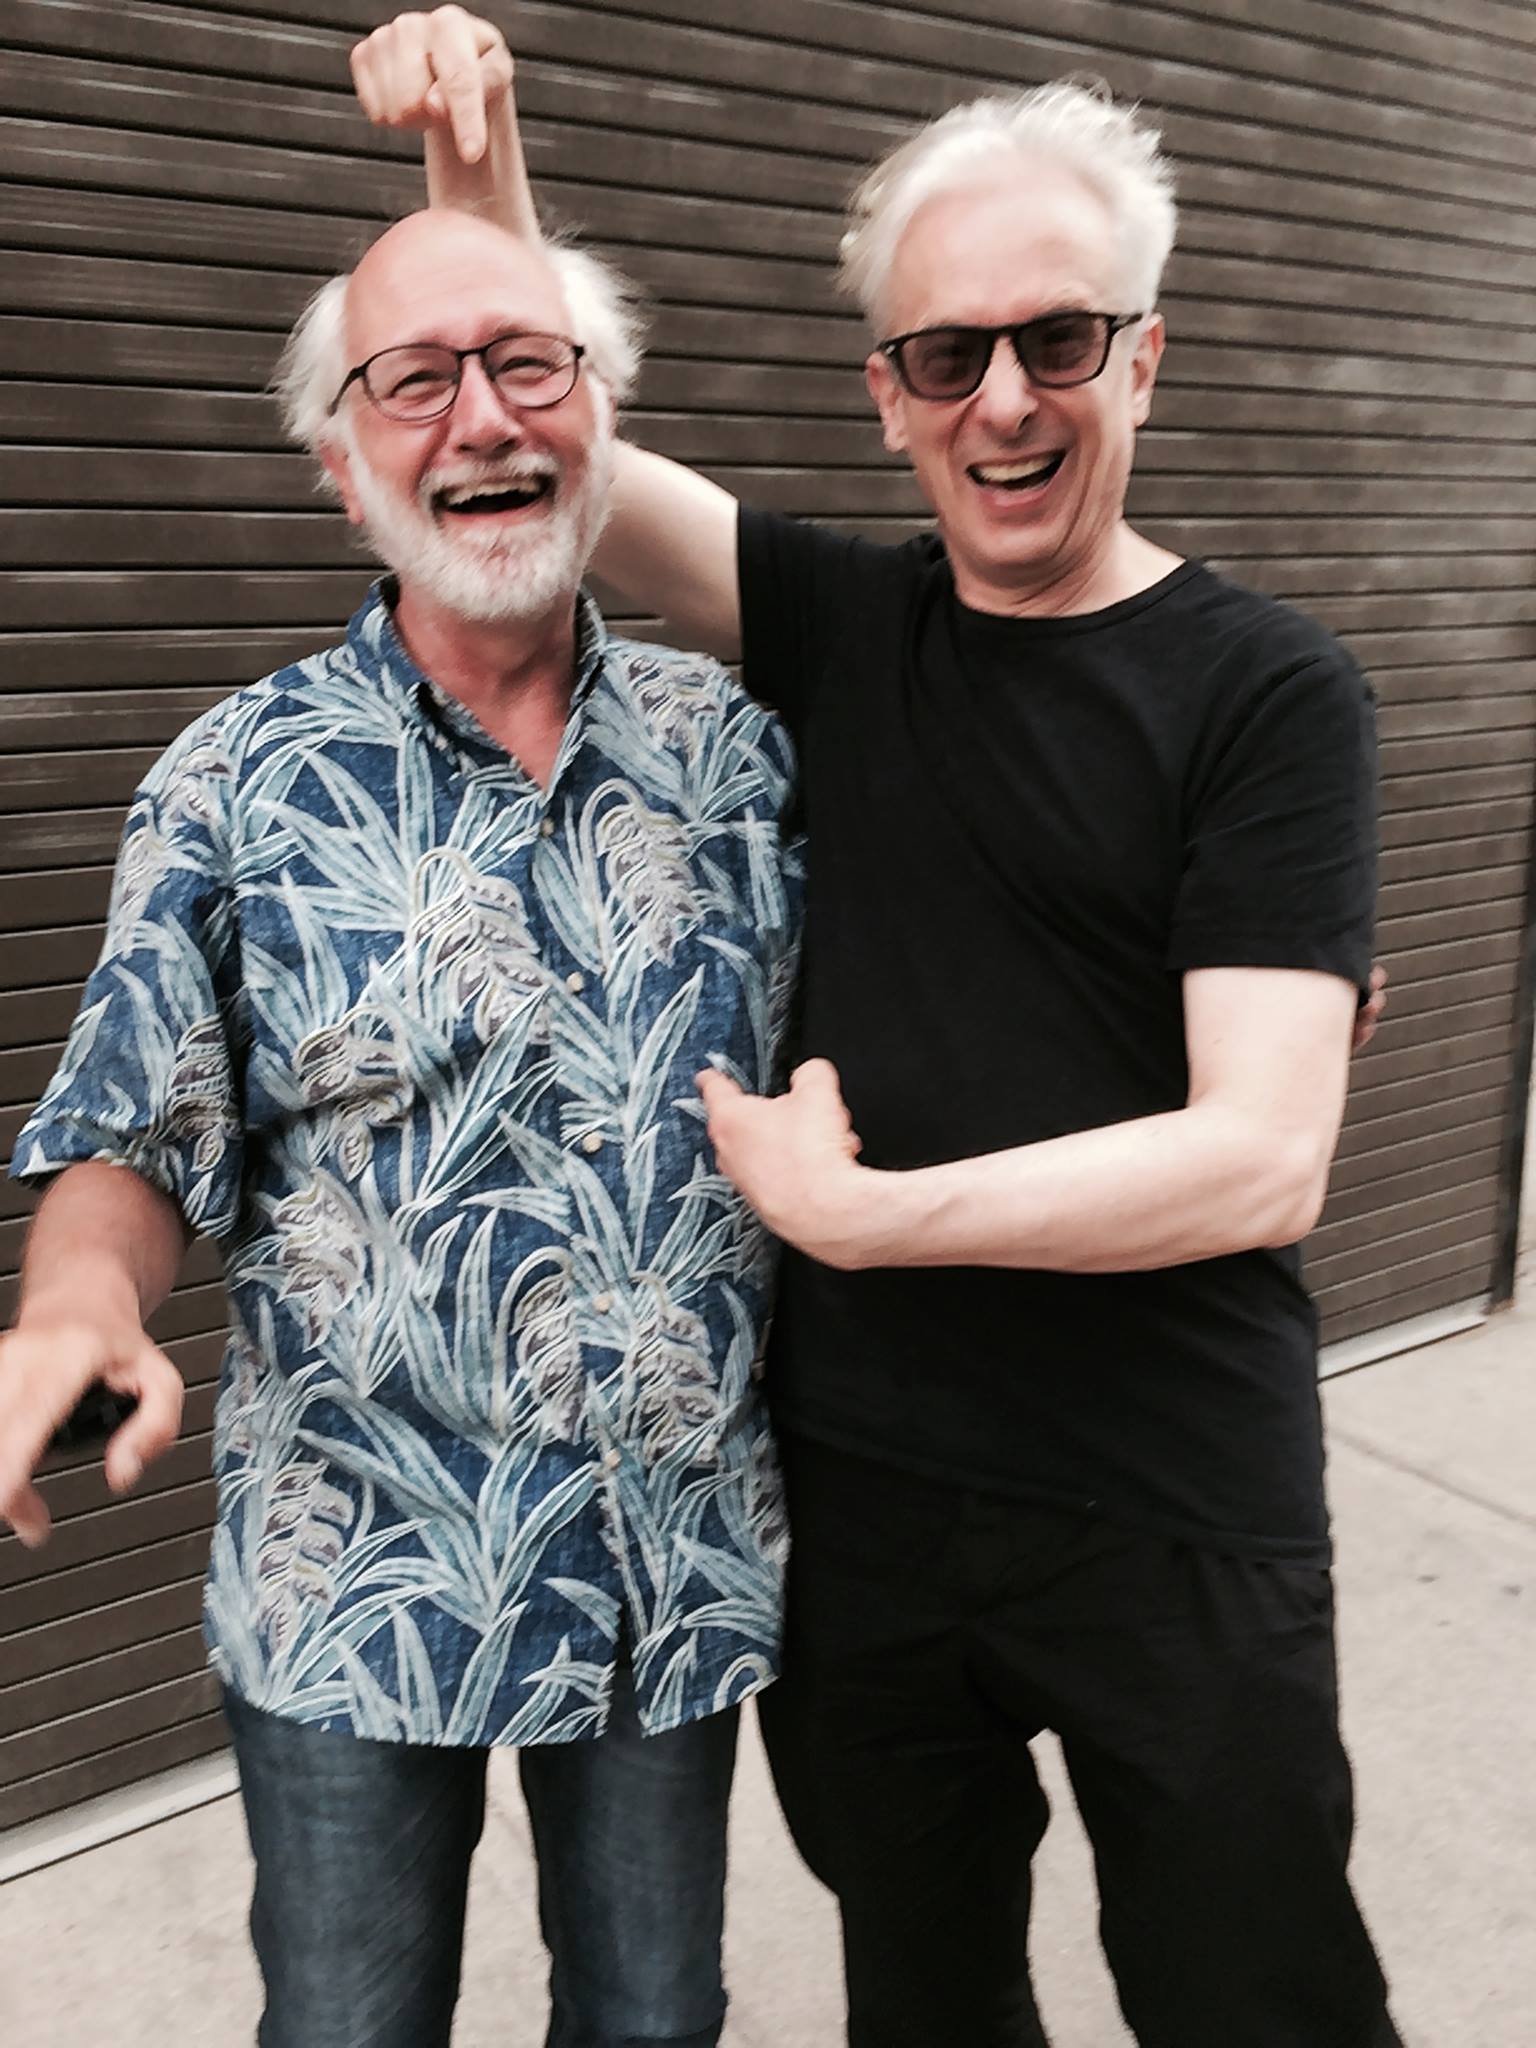 Mike Milton having fun with Elliot Grove @Raindance Toronto